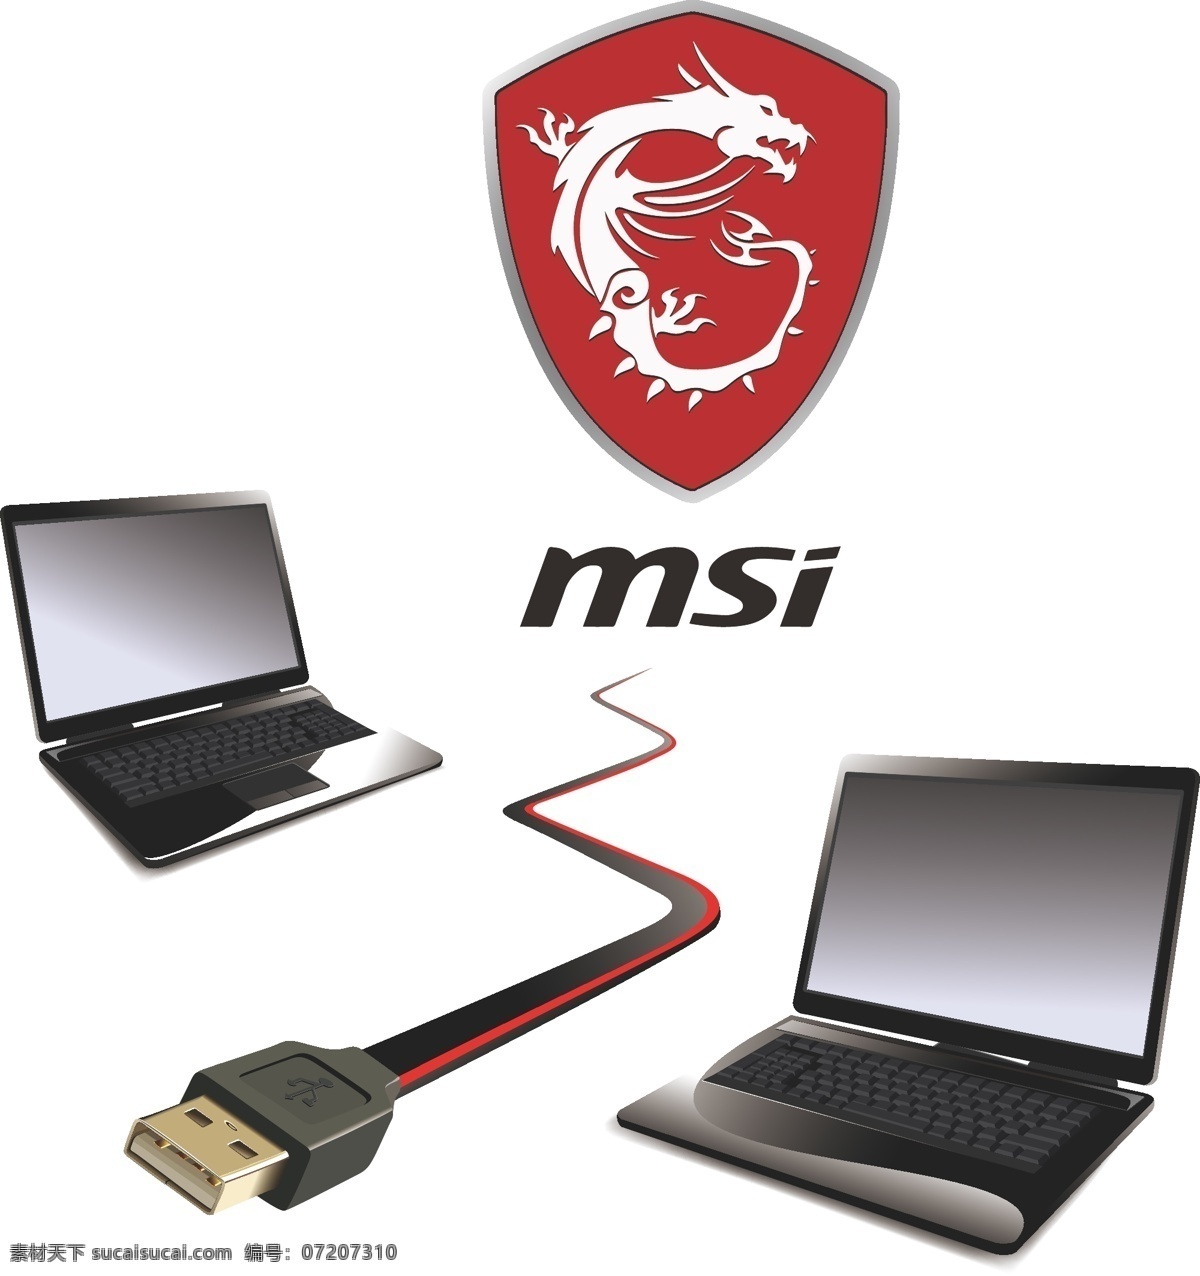 msi 微星 笔记本 电脑 msi笔记本 msi电脑 微星笔记本 微星电脑 微星logo logo设计